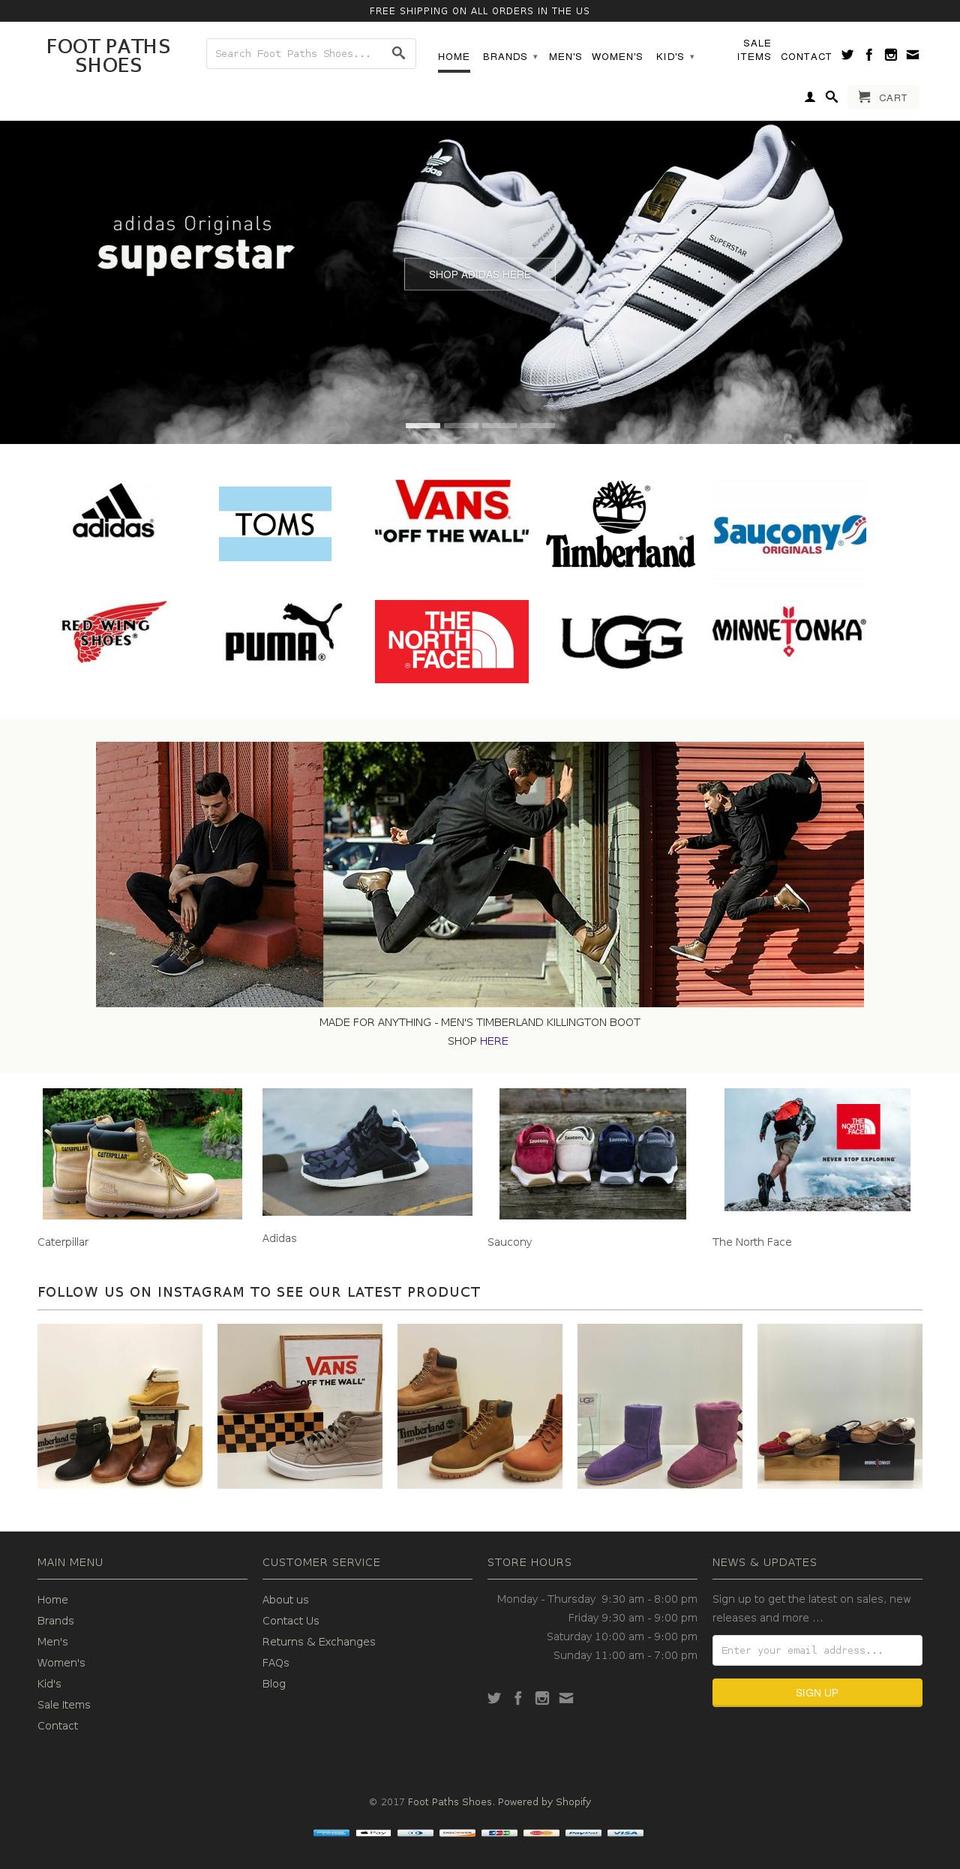 footpathsshoes.com shopify website screenshot